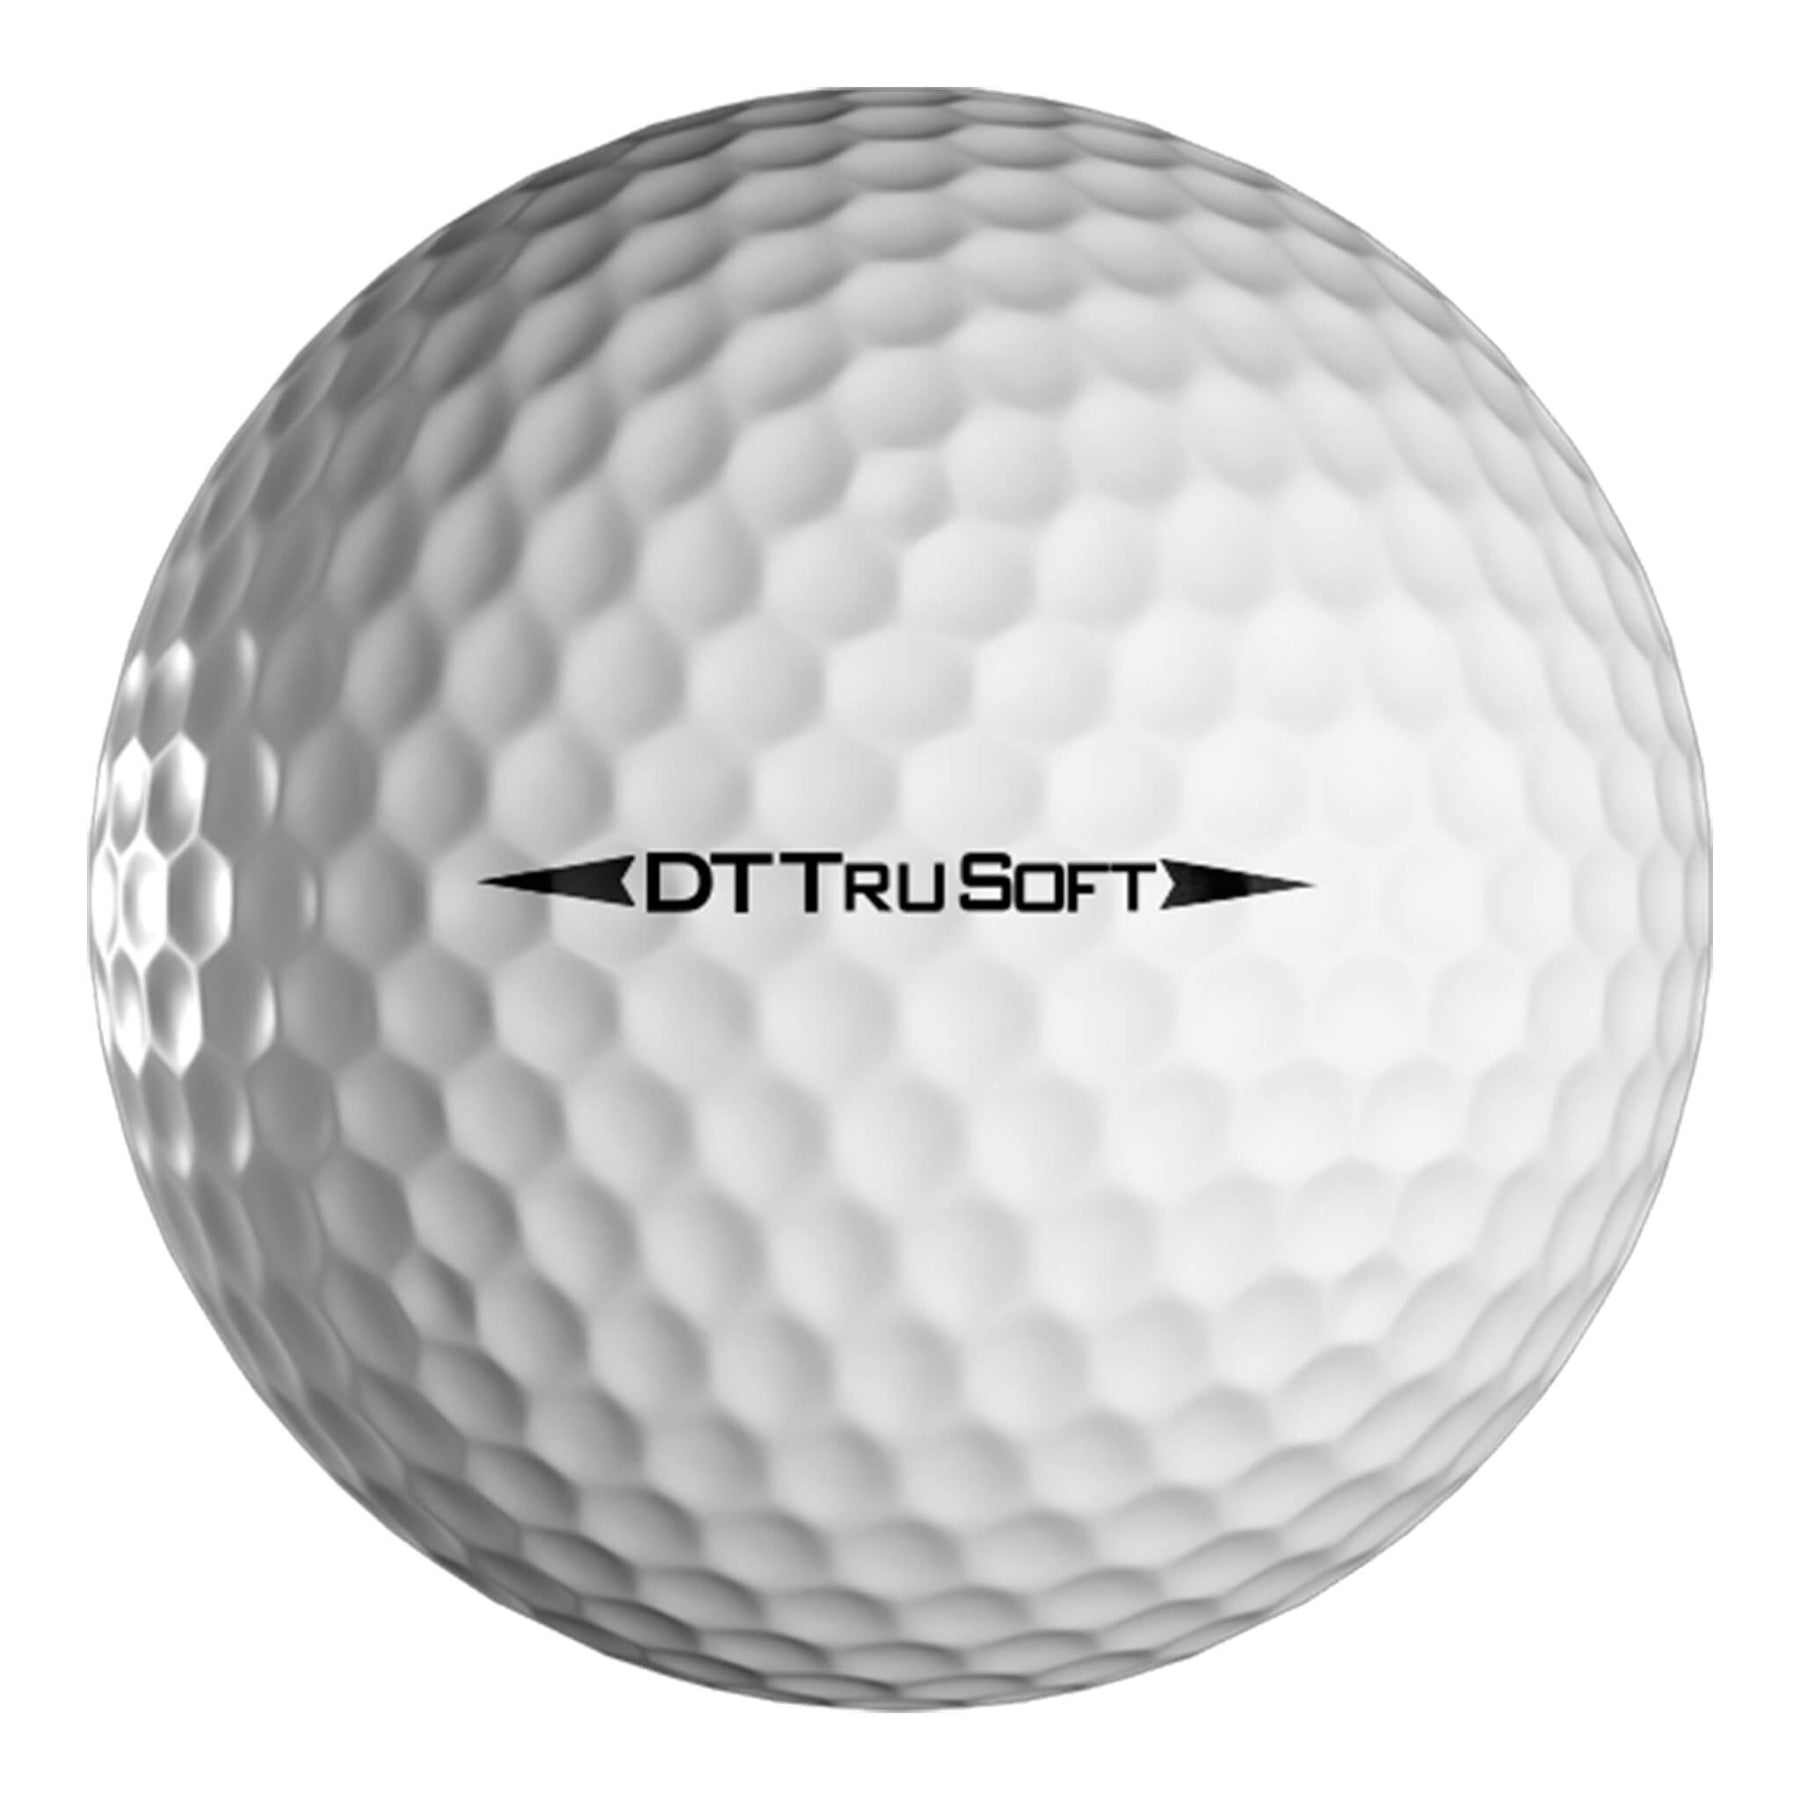 Titleist DT Trustoft 2017 / 2019